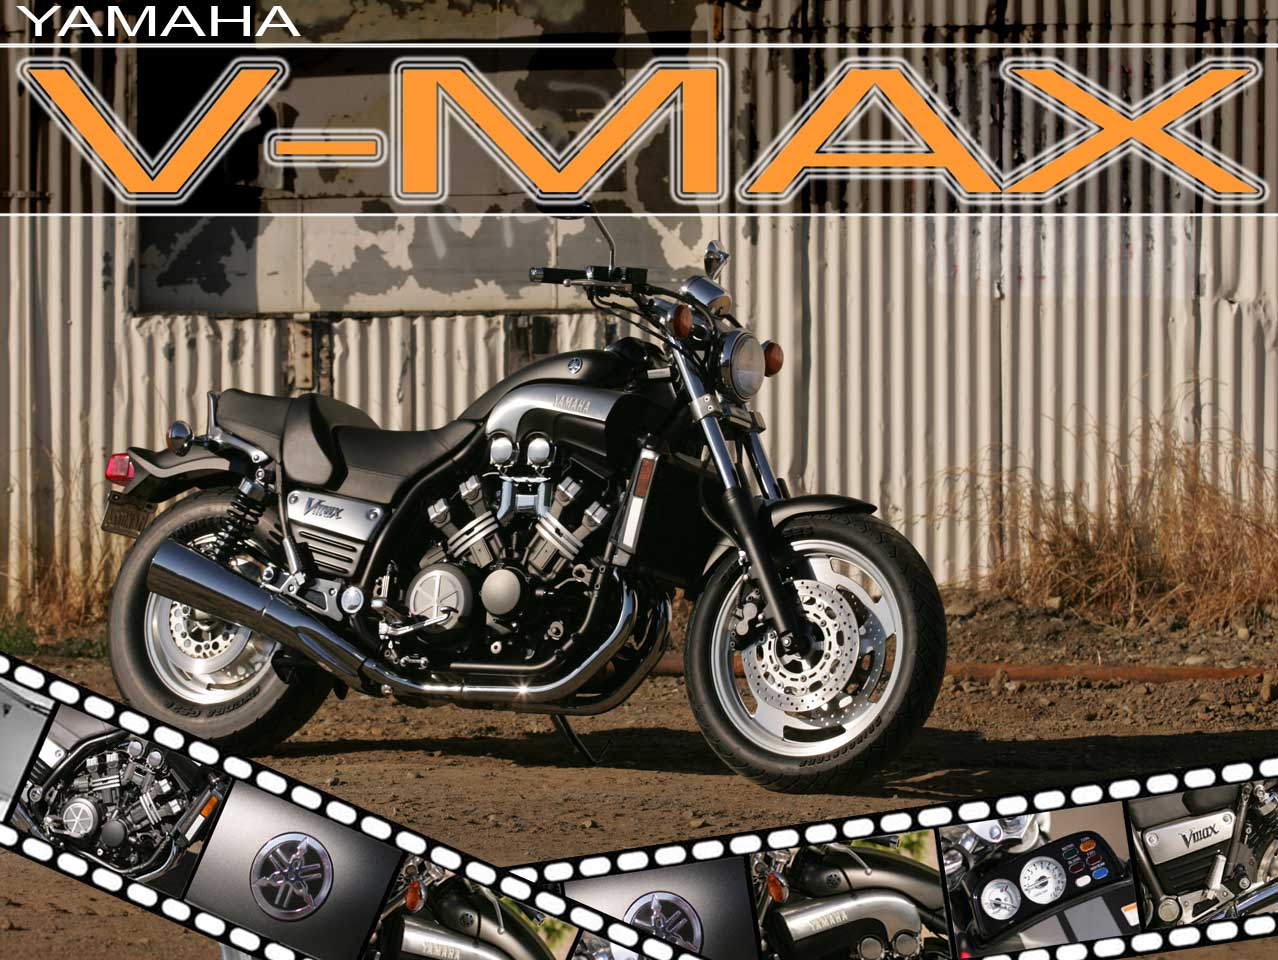 2013 black yamaha r1 yamaha vmax tuning